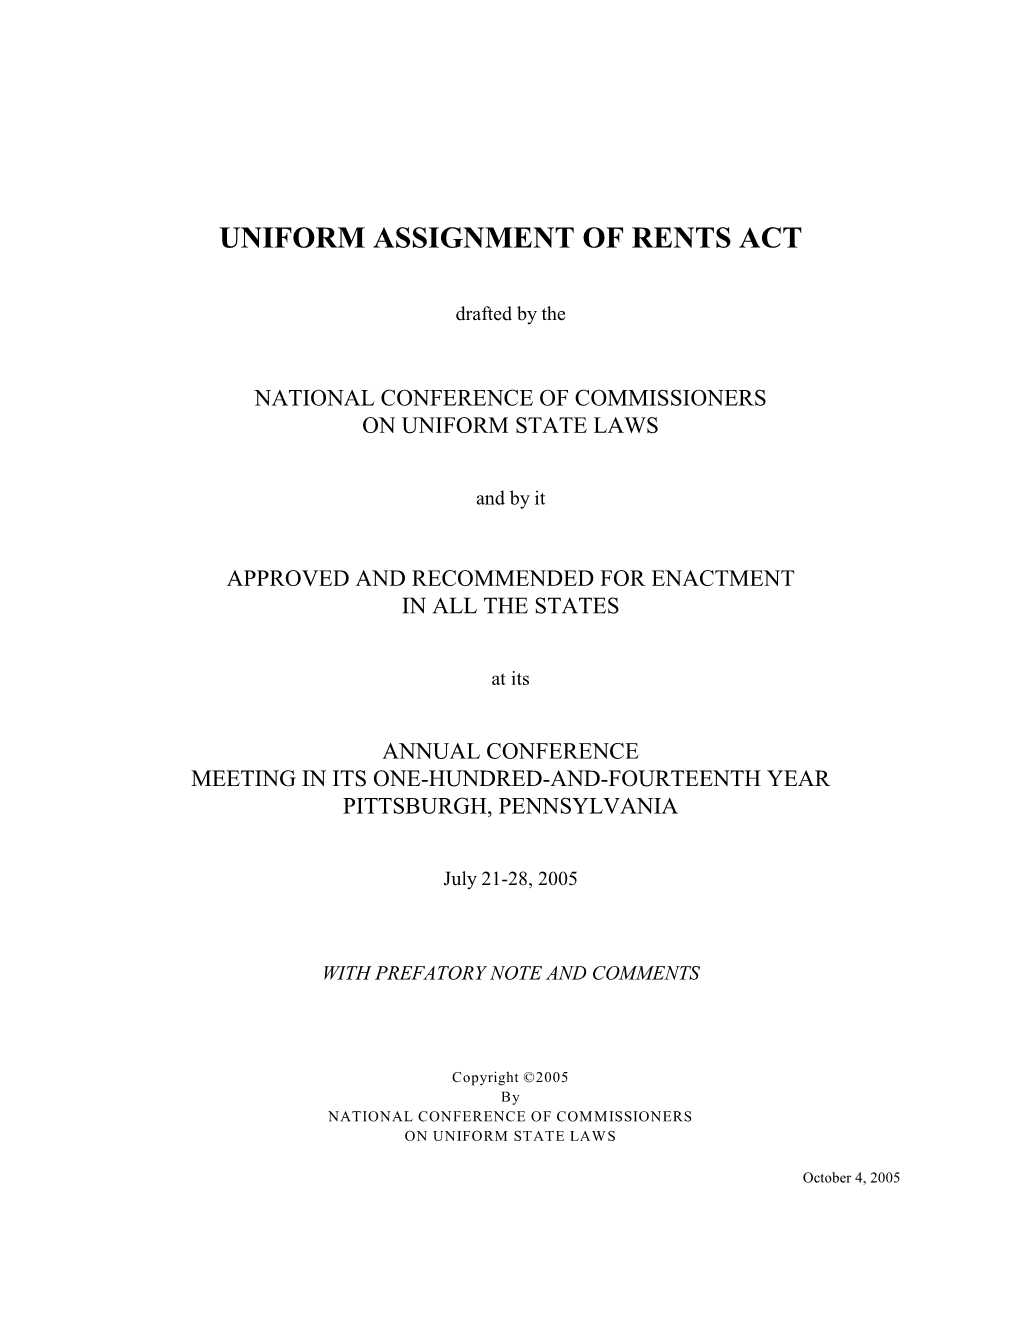 Uniform Assignment of Rents Act